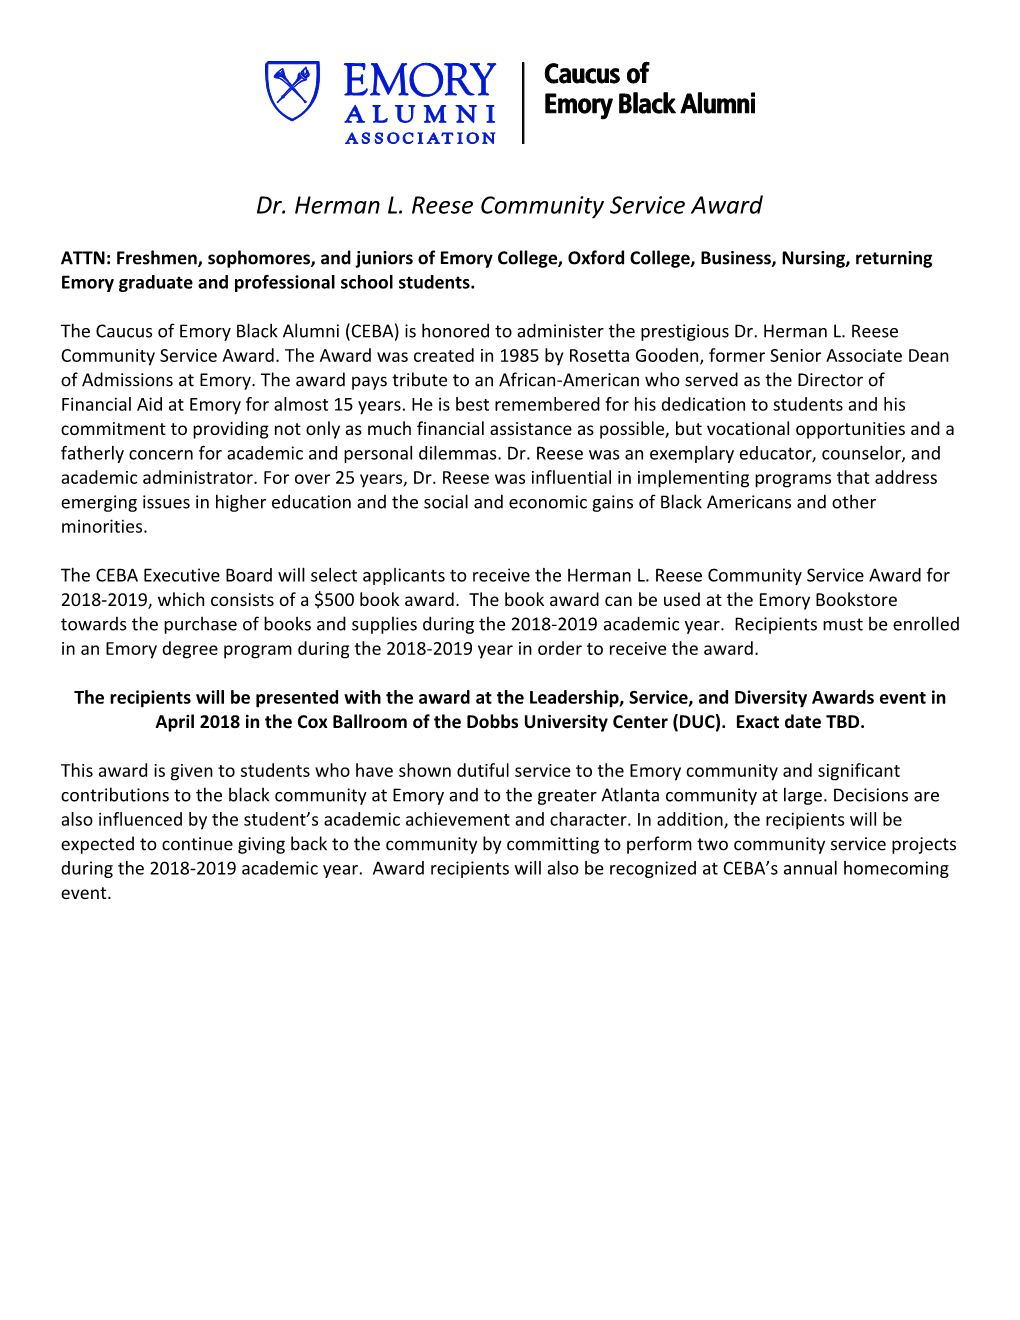 Dr. Herman L. Reese Community Service Award